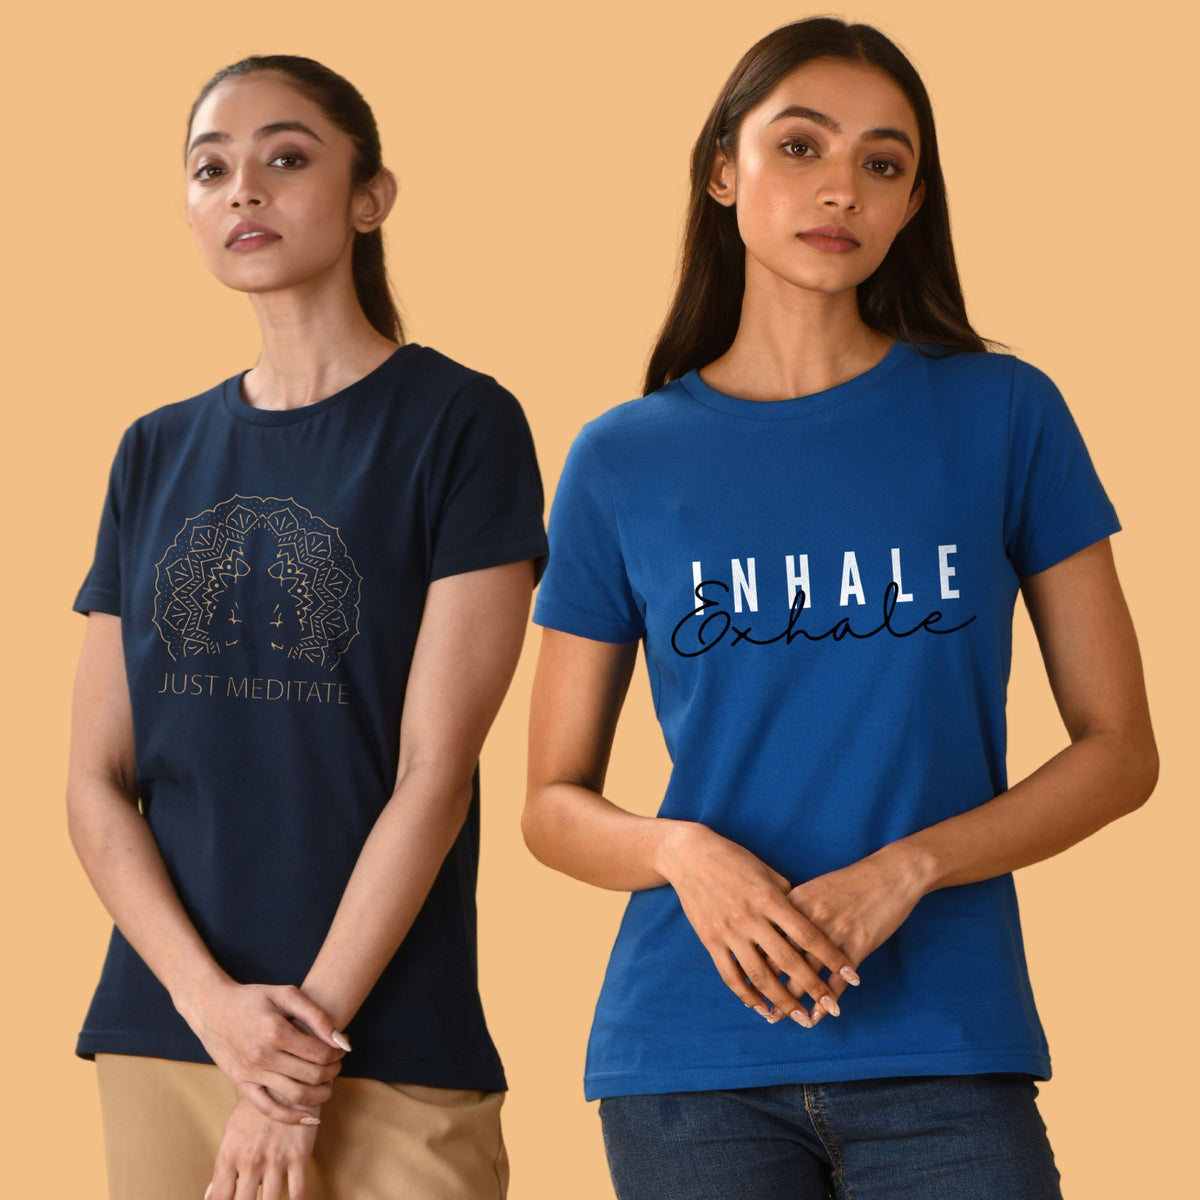 just-meditate-navy-blue-inhale-exhale-royal-blue-Combo-women-cotton-yoga-printed-tshirt-gogirgit-com